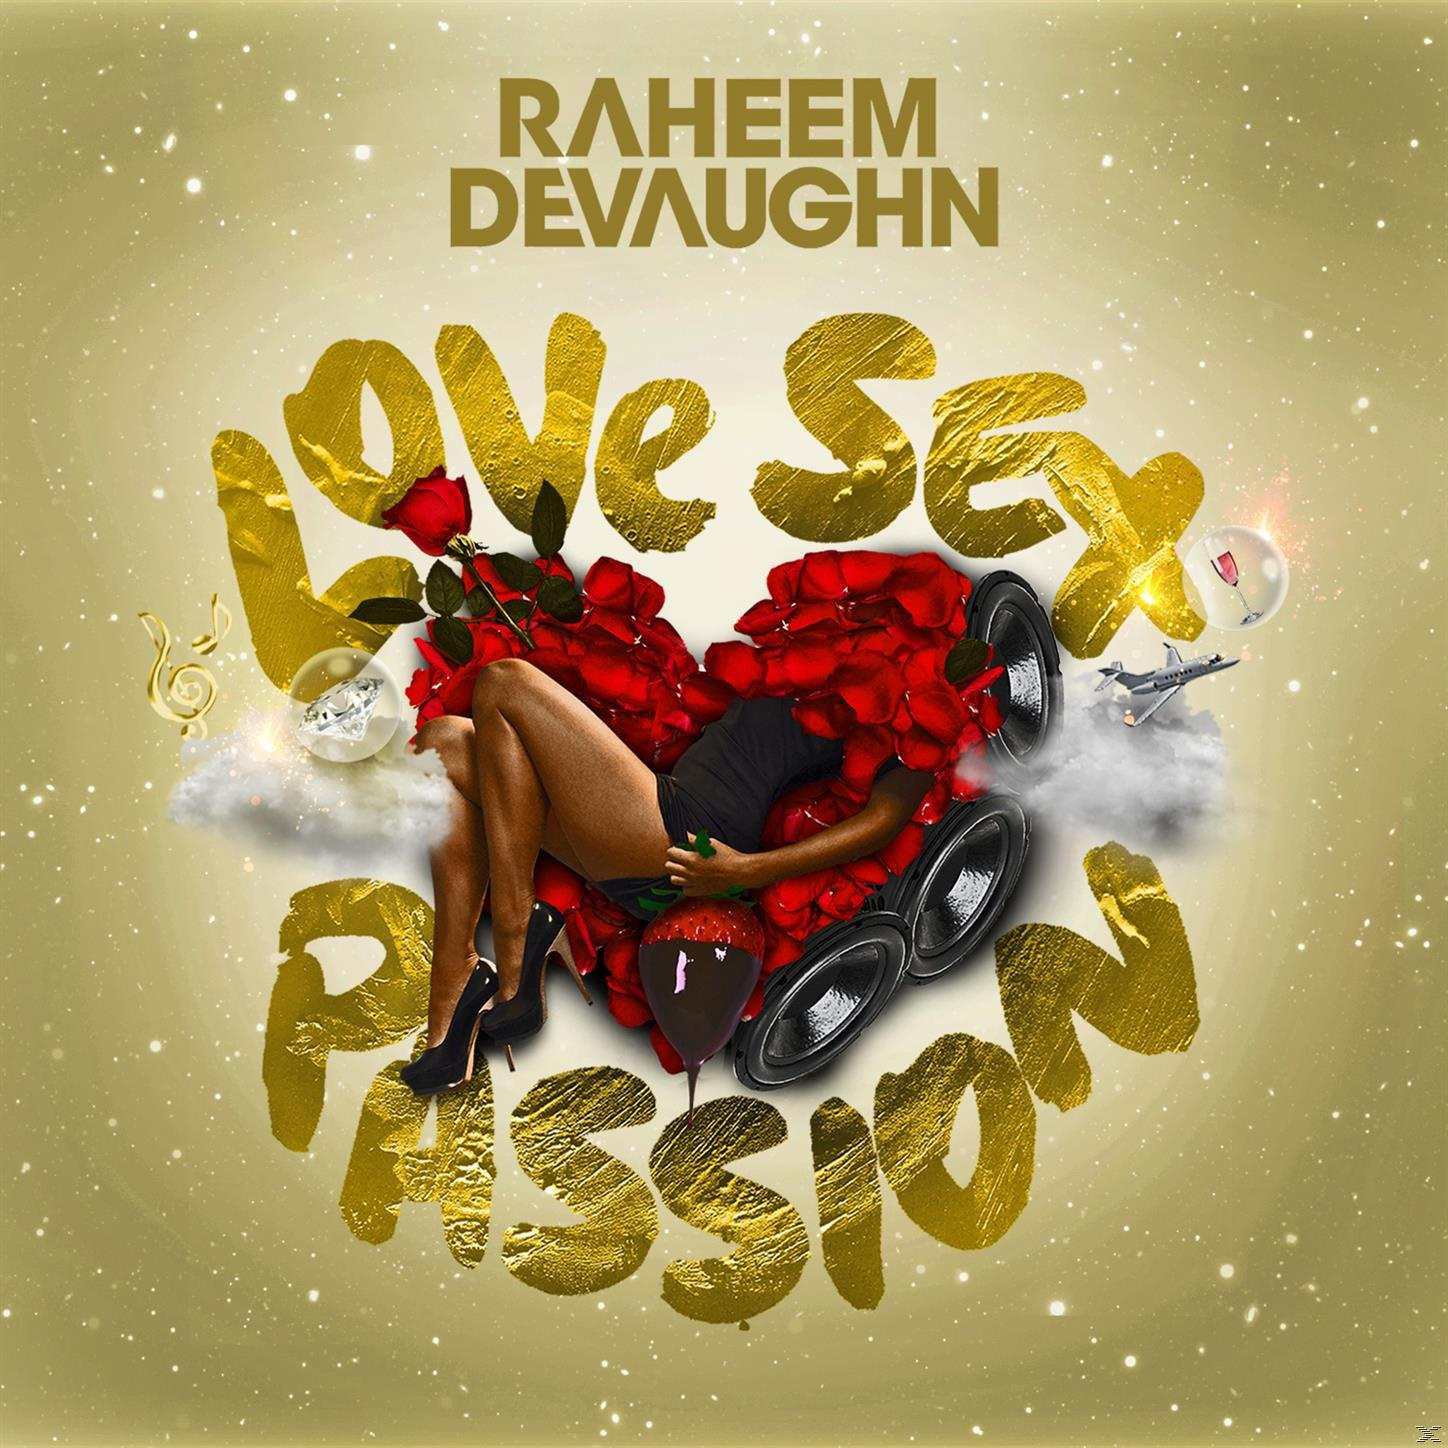 Raheem Devaughn - Love, Sex Passion - (CD) 